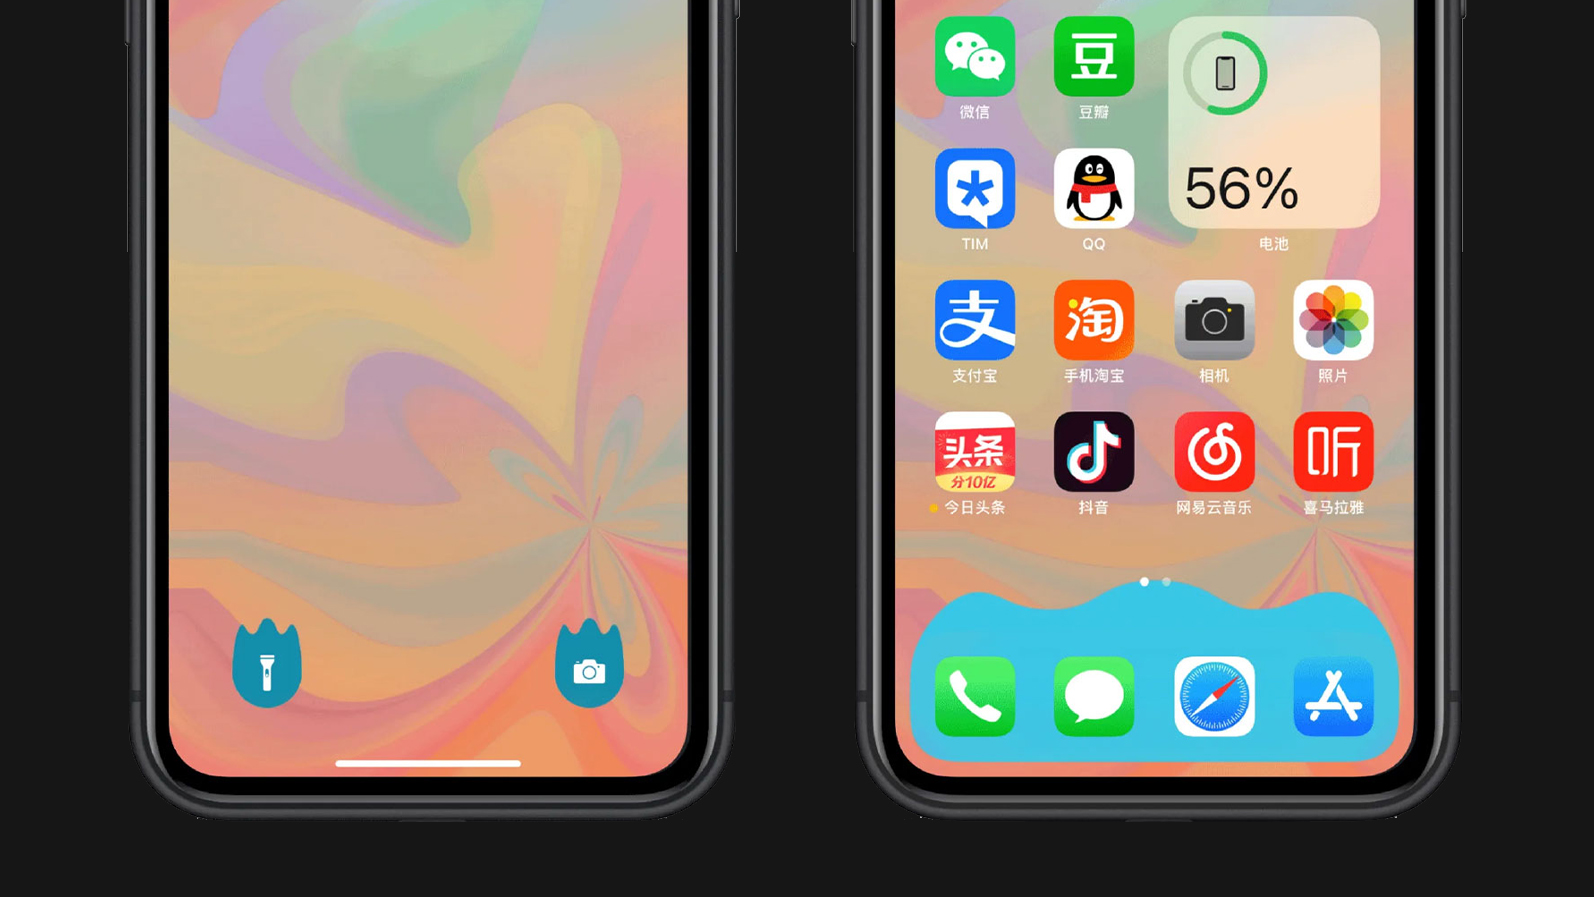 iphone特效壁纸更新:可修改锁屏图标,隐藏dock栏